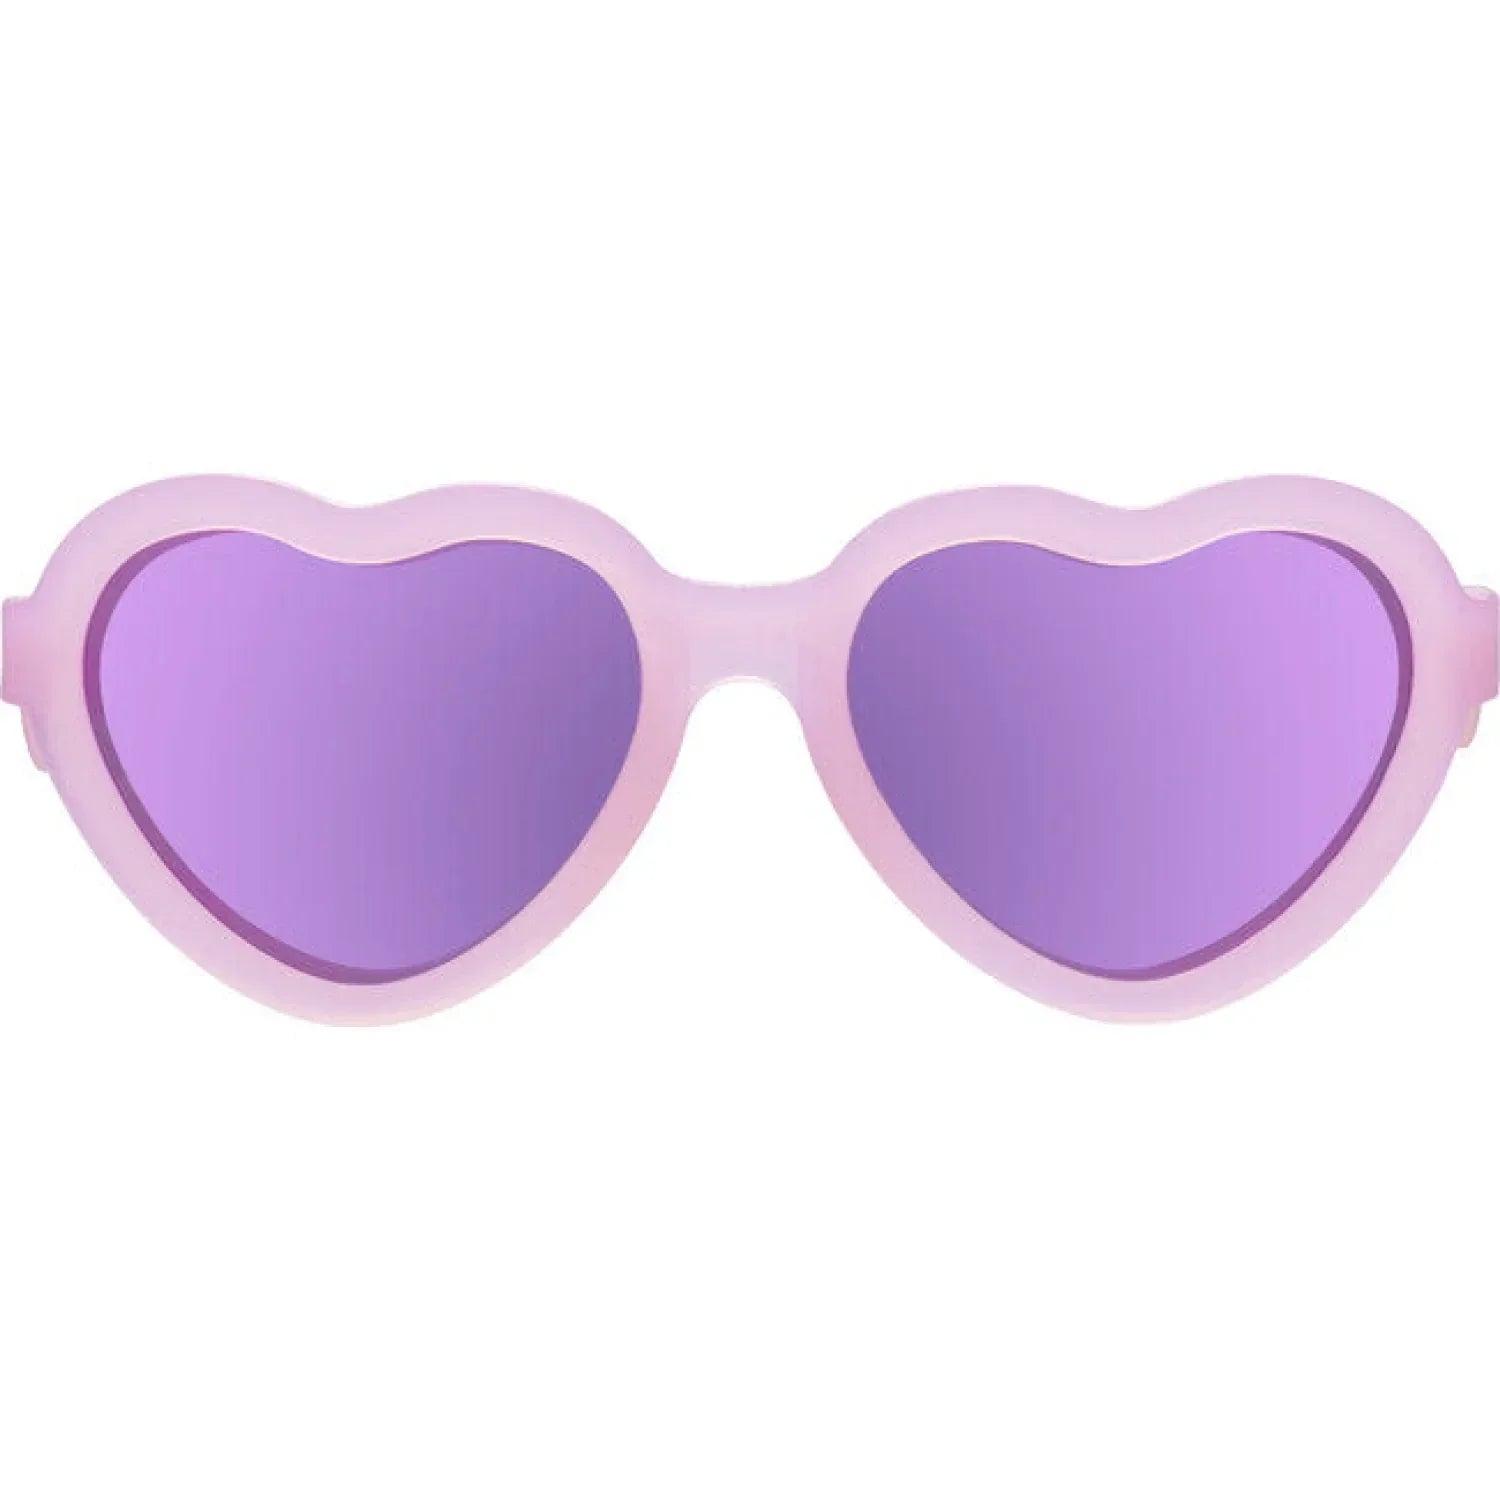 Babiator EYEWEAR - SUNGLASSES - SUNGLASSES Kids Polarized Heart Sunglasses PURPLE 0-2Y